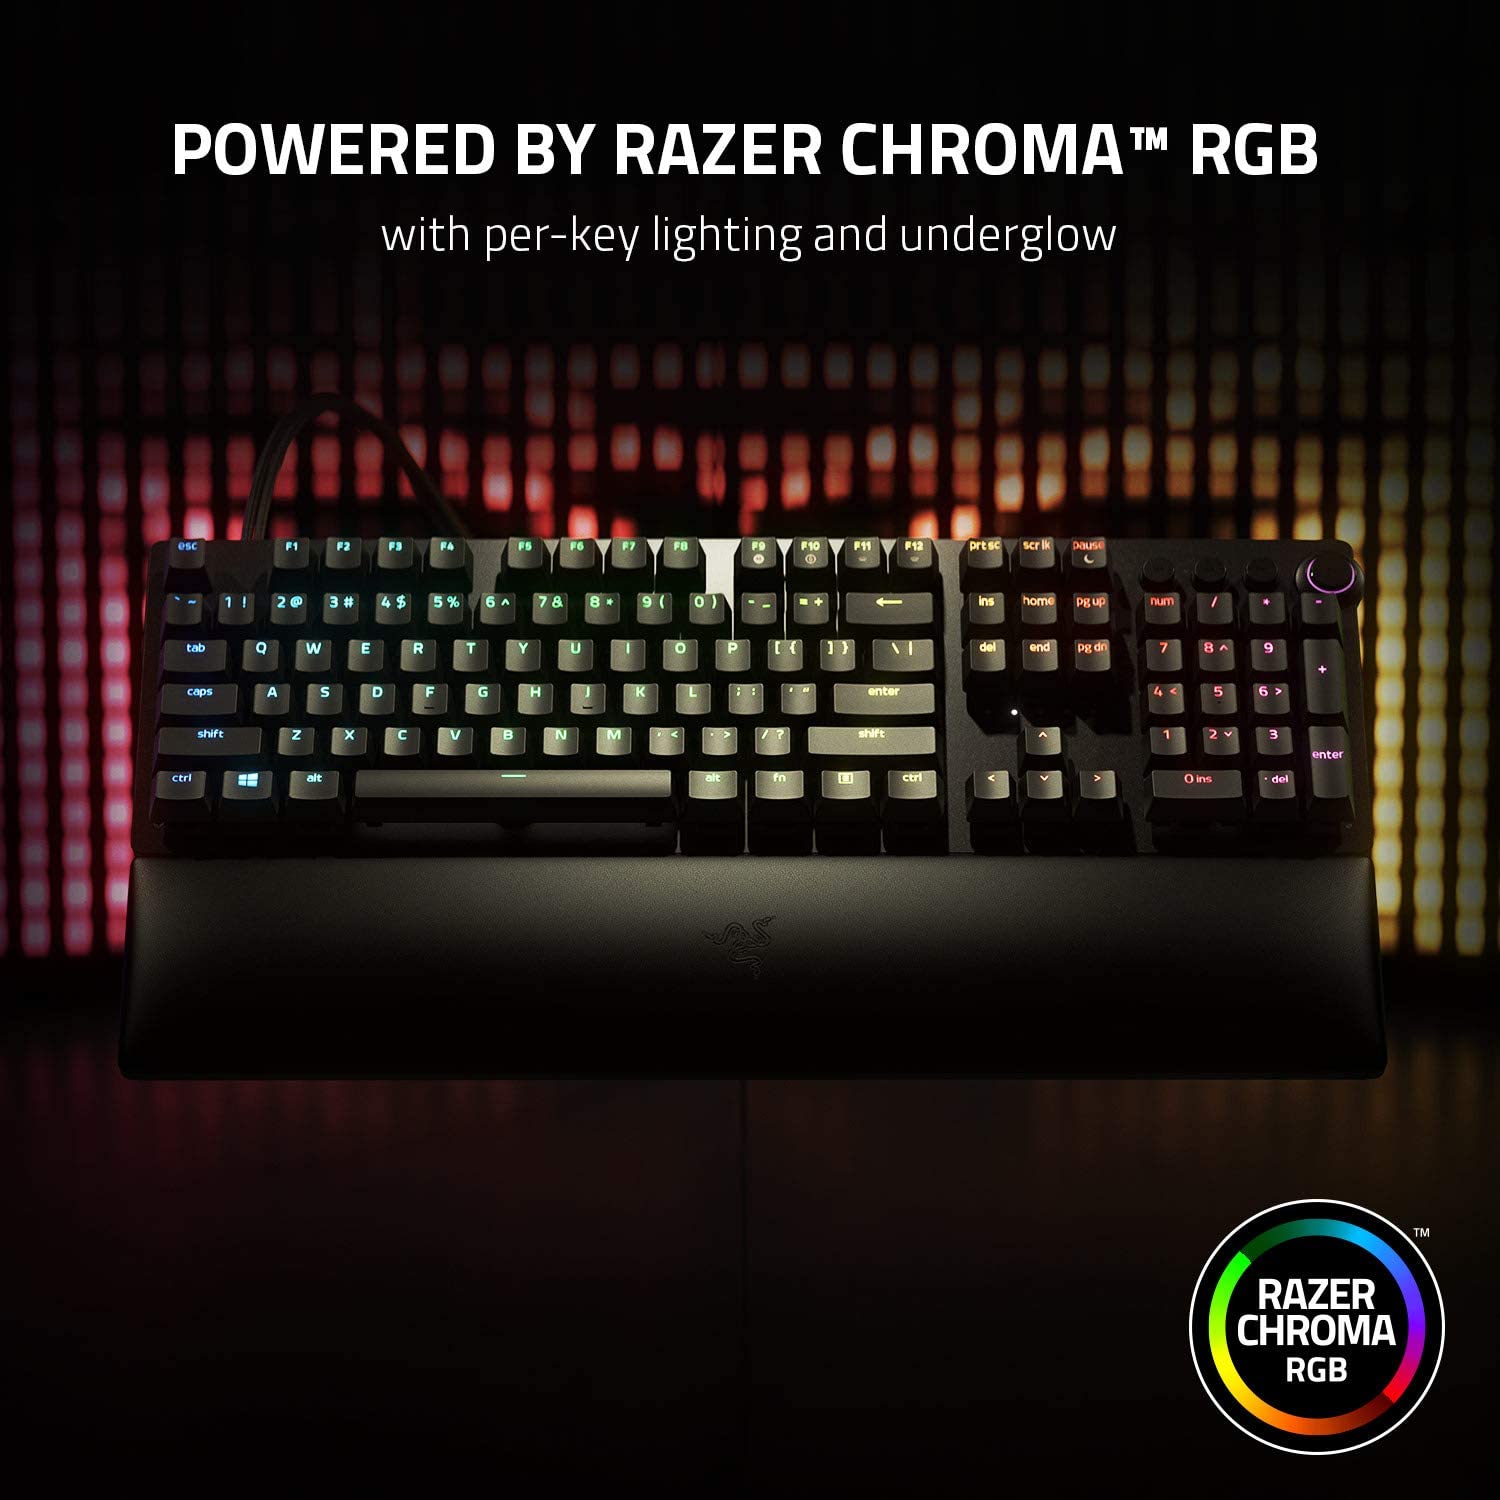 Razer Huntsman V2 Pro Analog Optical Gaming Keyboard with Mouse Pad Bundle